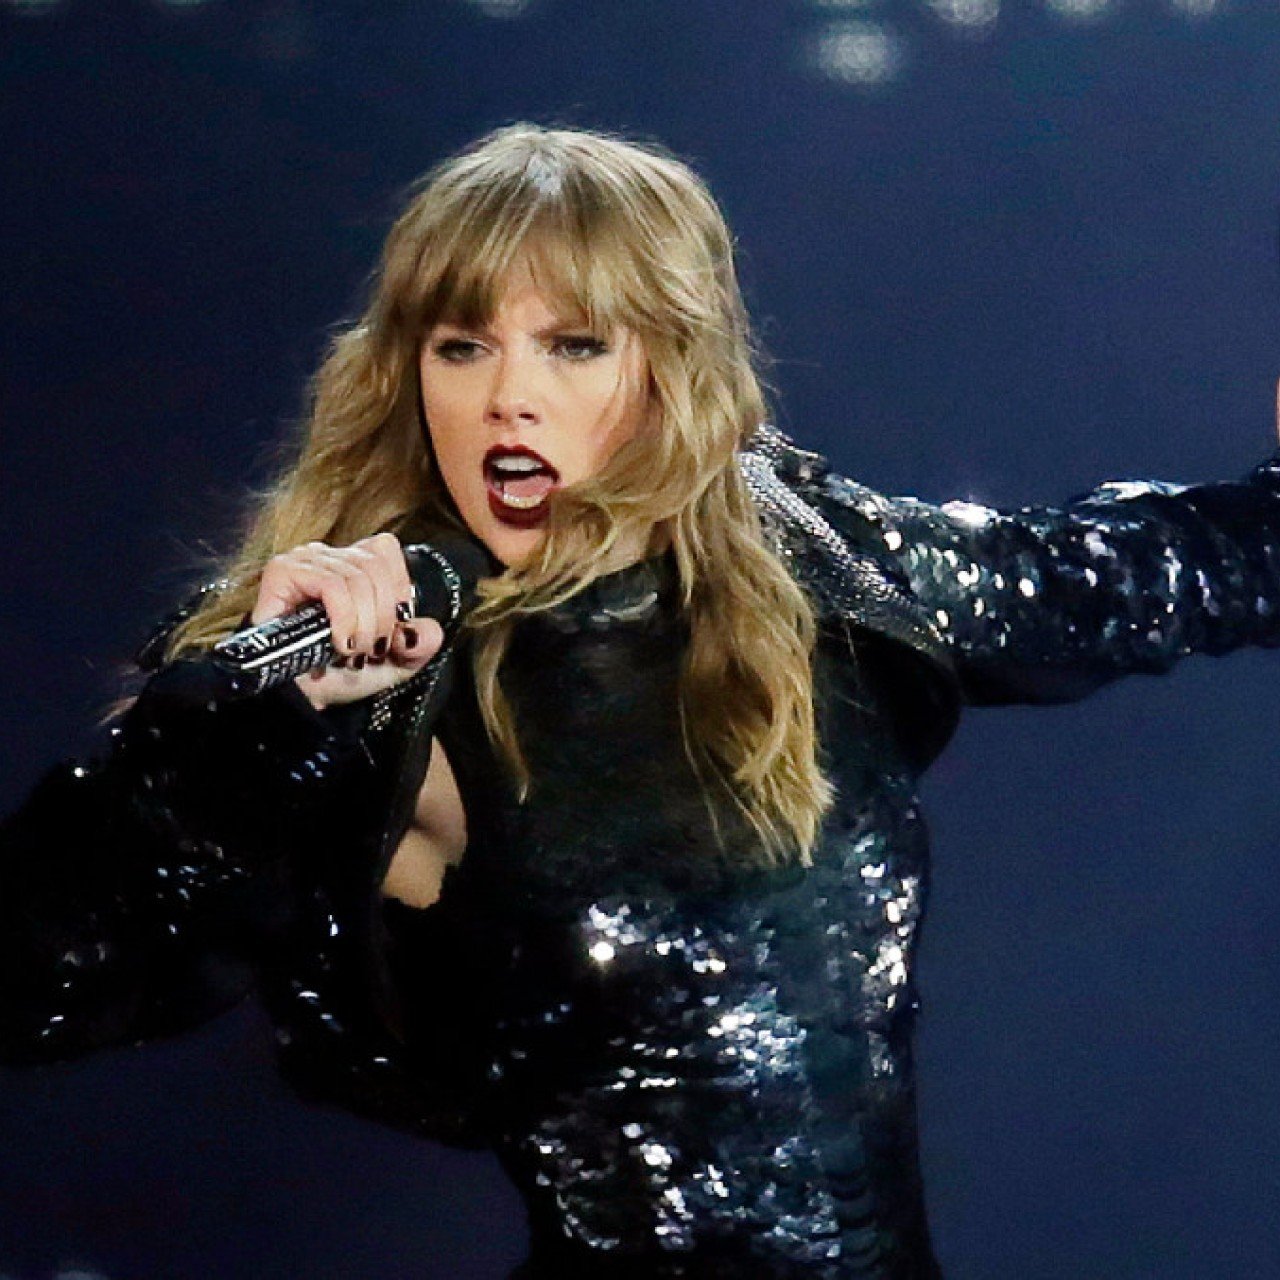 Taylor Swift's Reputation Netflix concert film is essential